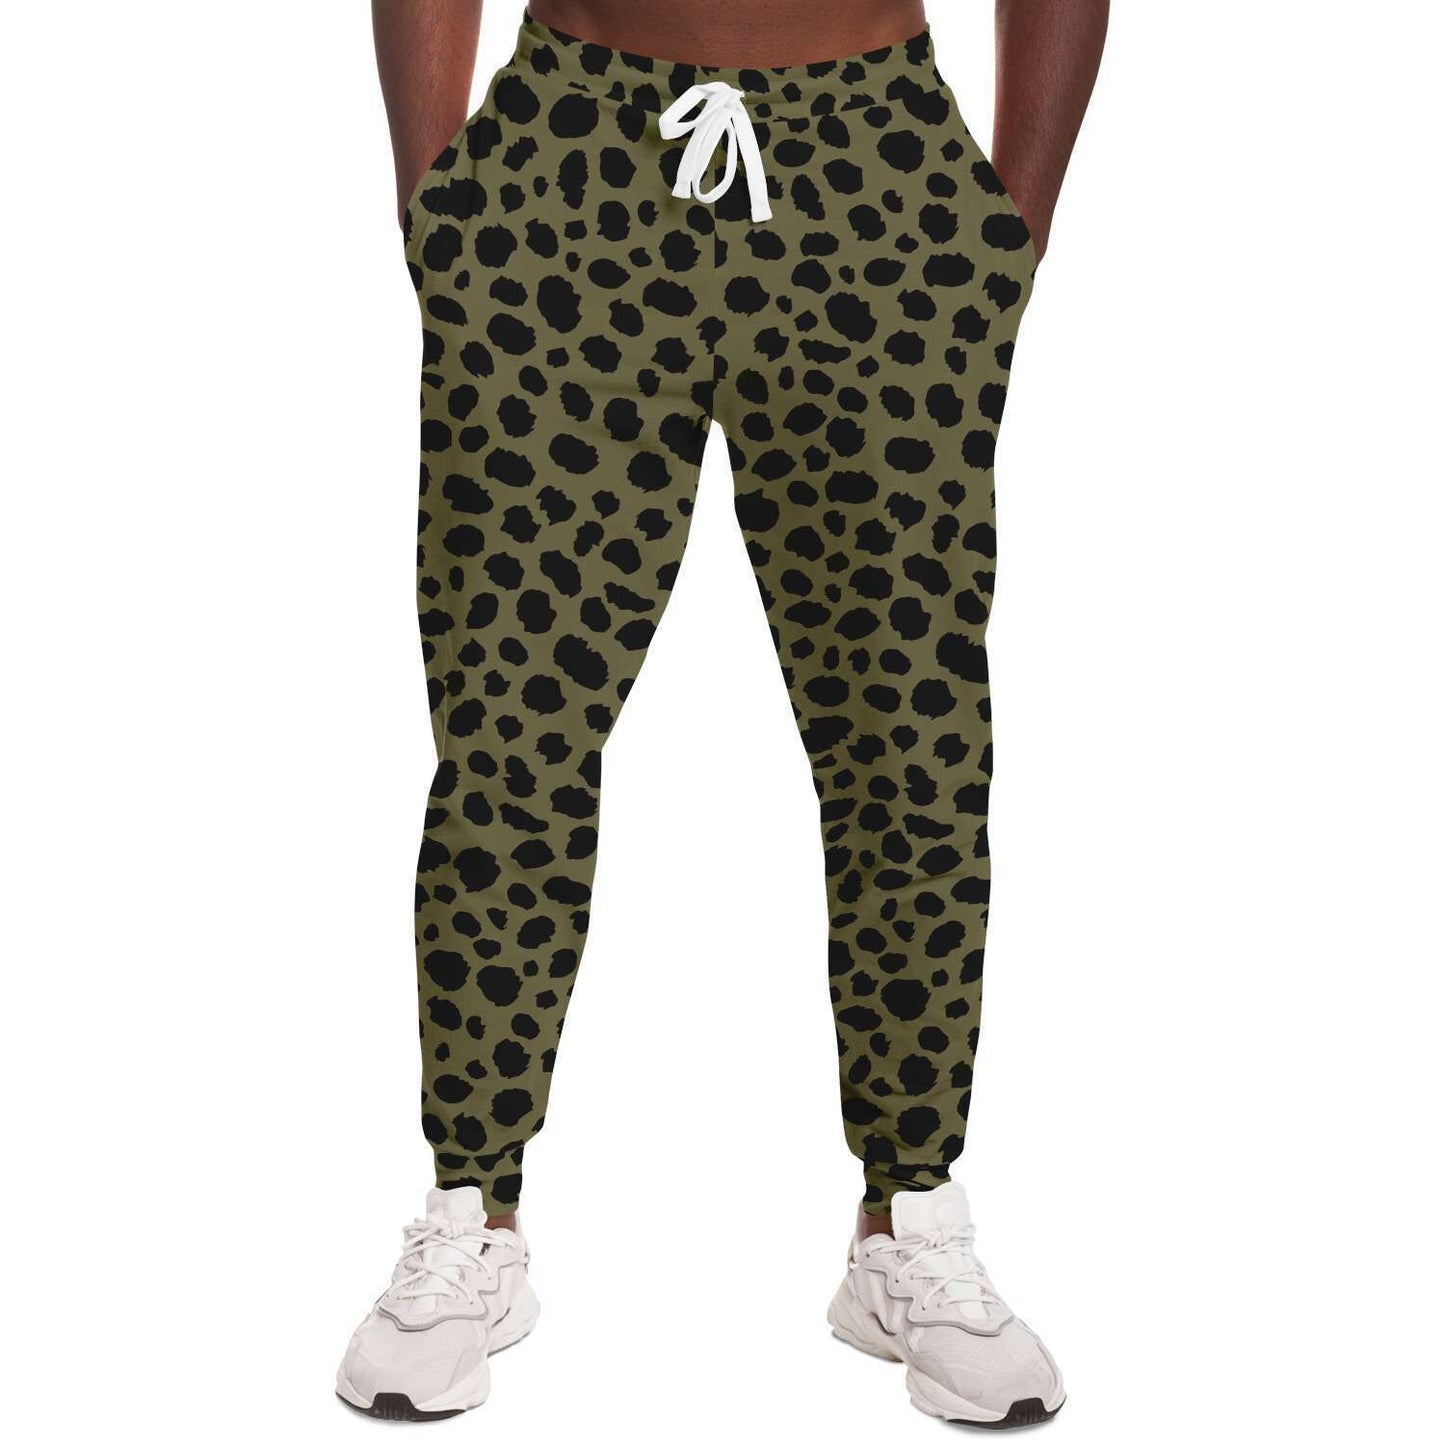 Cheetah green | Animal print pants, Leopard print pants, Queer fashion